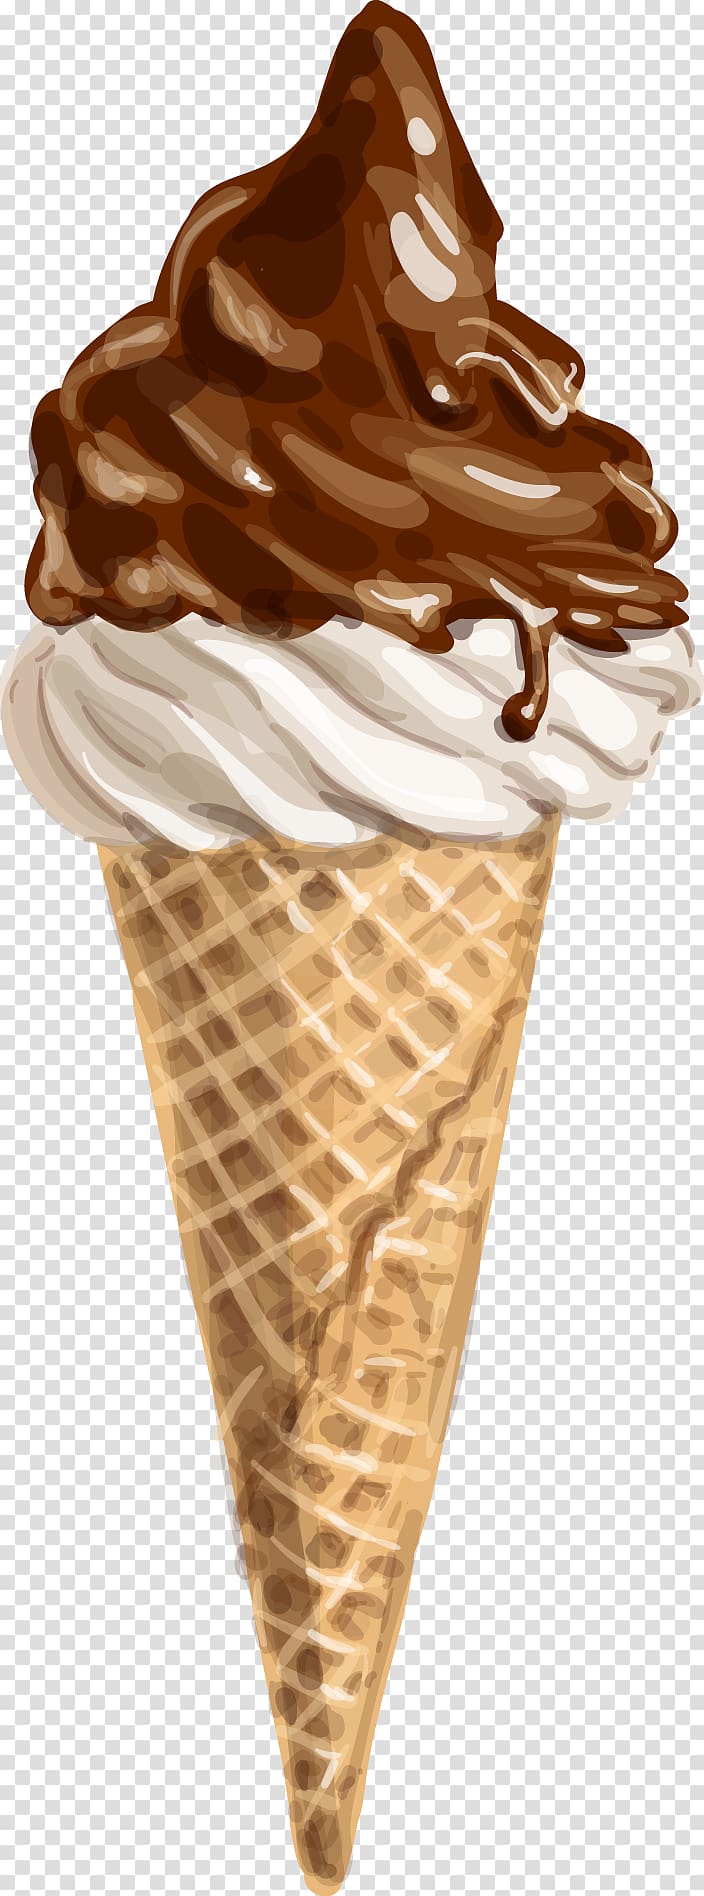 chocolate ice cream in cone art, Ice cream cone Chocolate ice cream, hand painted ice cream transparent background PNG clipart